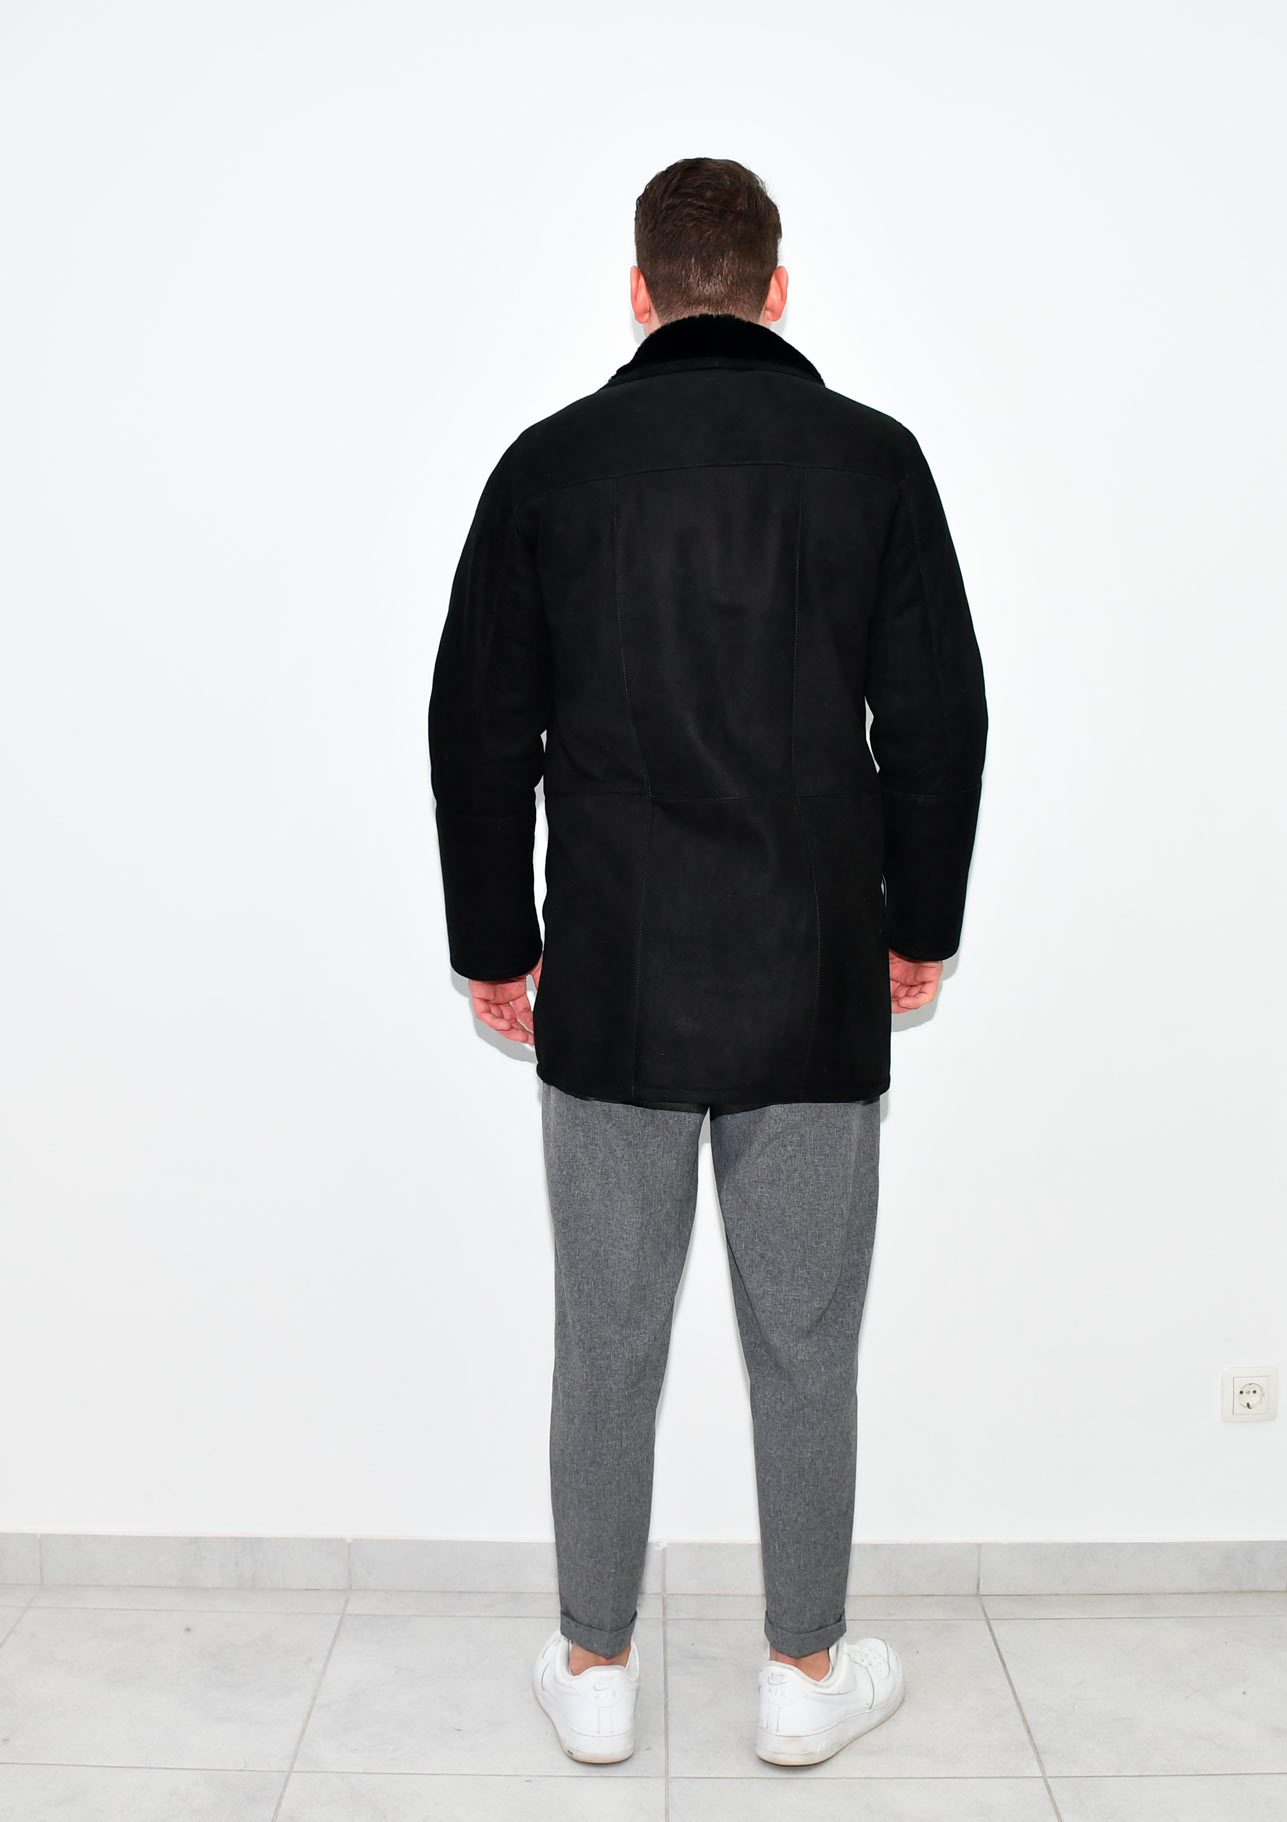 3 jacket Mutton black all size 580e